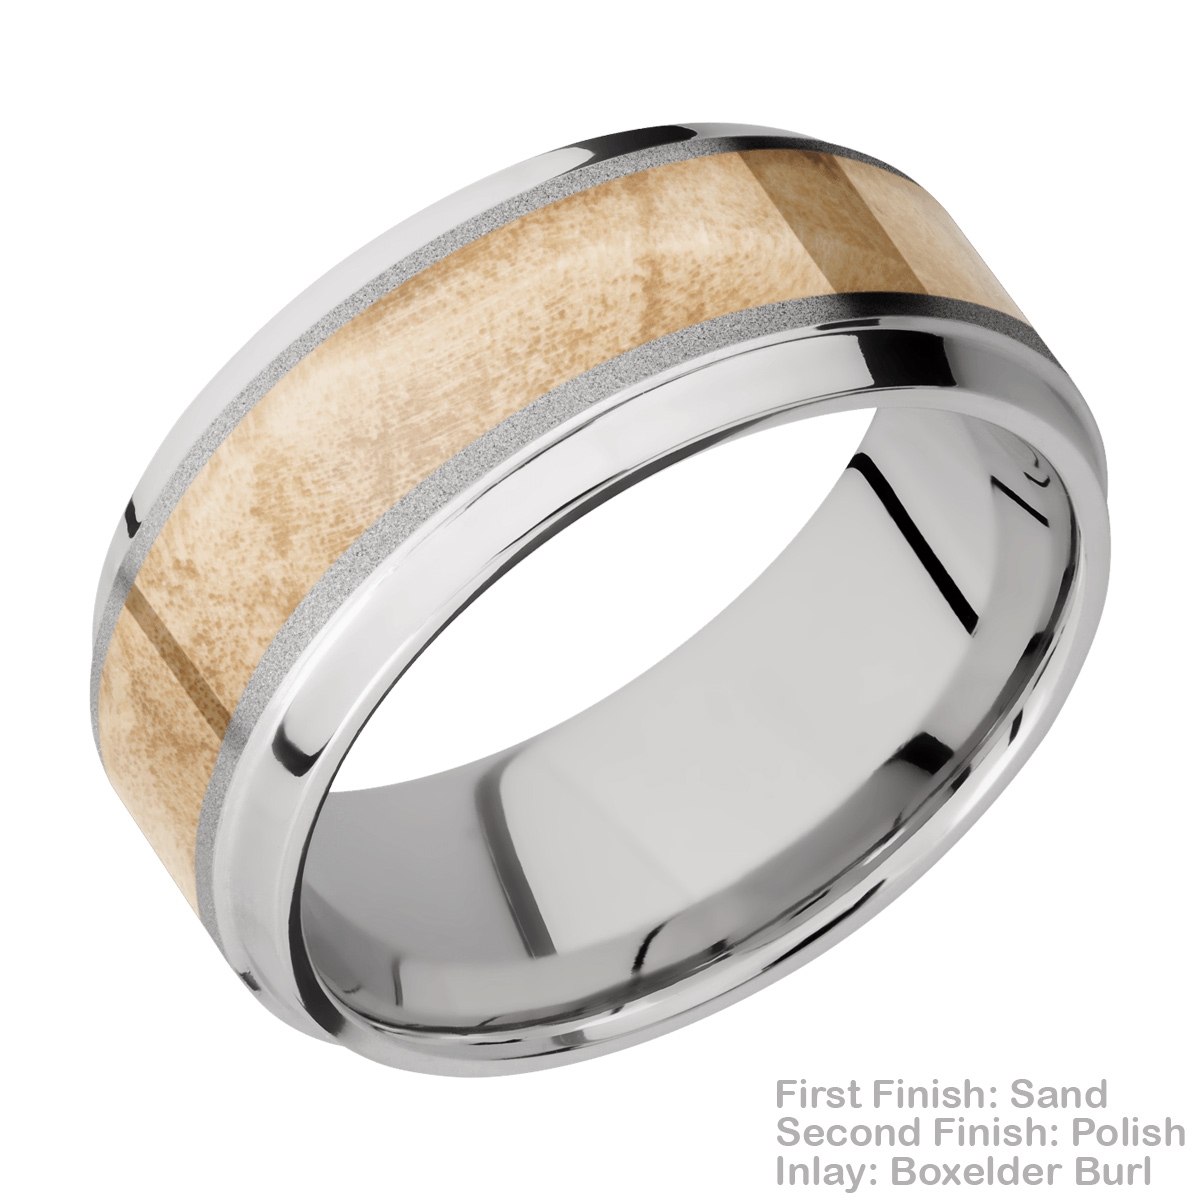 Lashbrook CC9B15(S)/HARDWOOD Cobalt Chrome Wedding Ring or Band